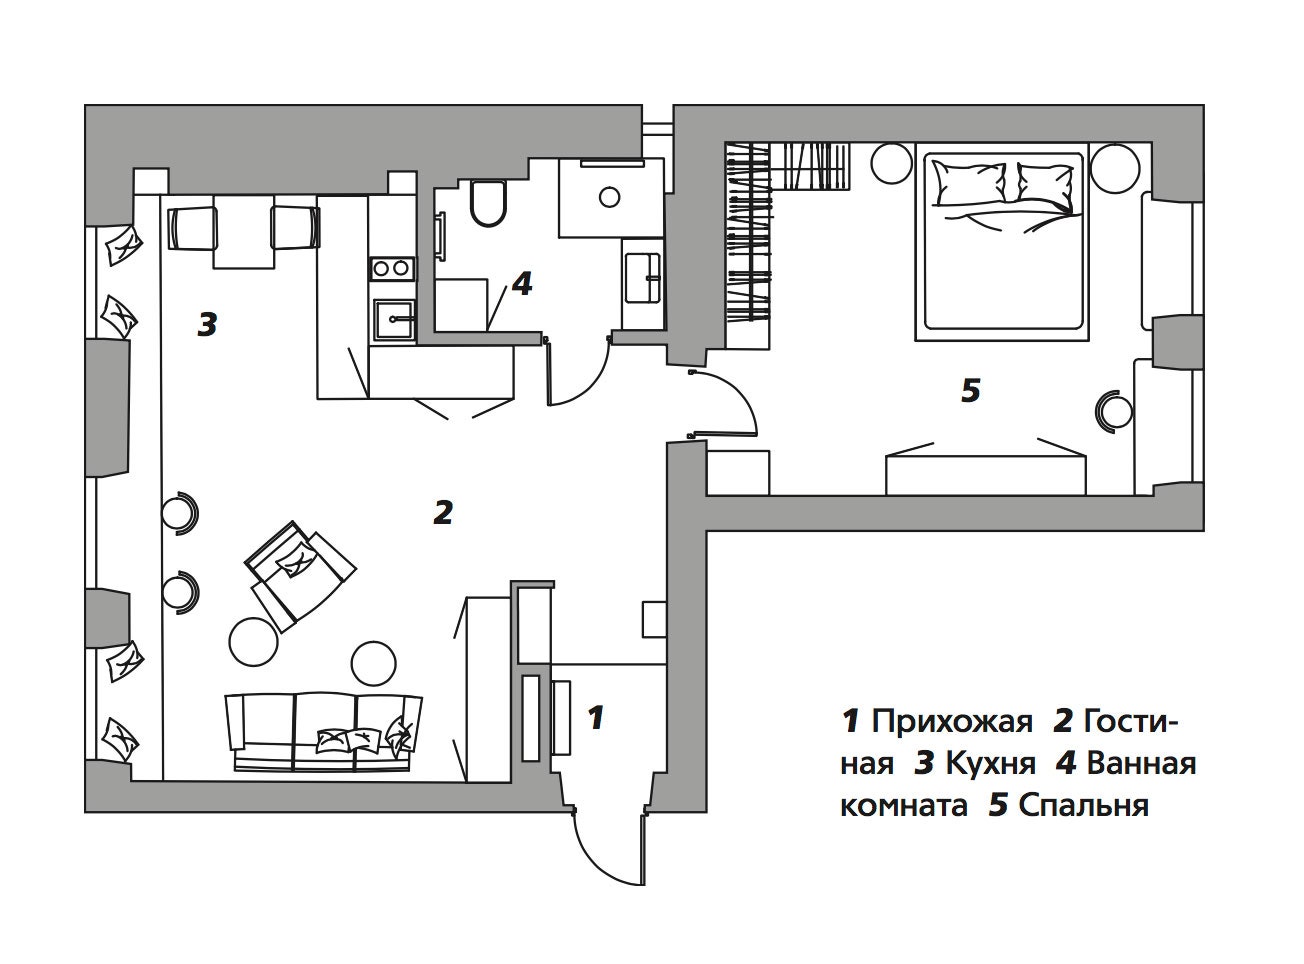 Квартира по проекту Марии Амелиной в Москве 60 м²